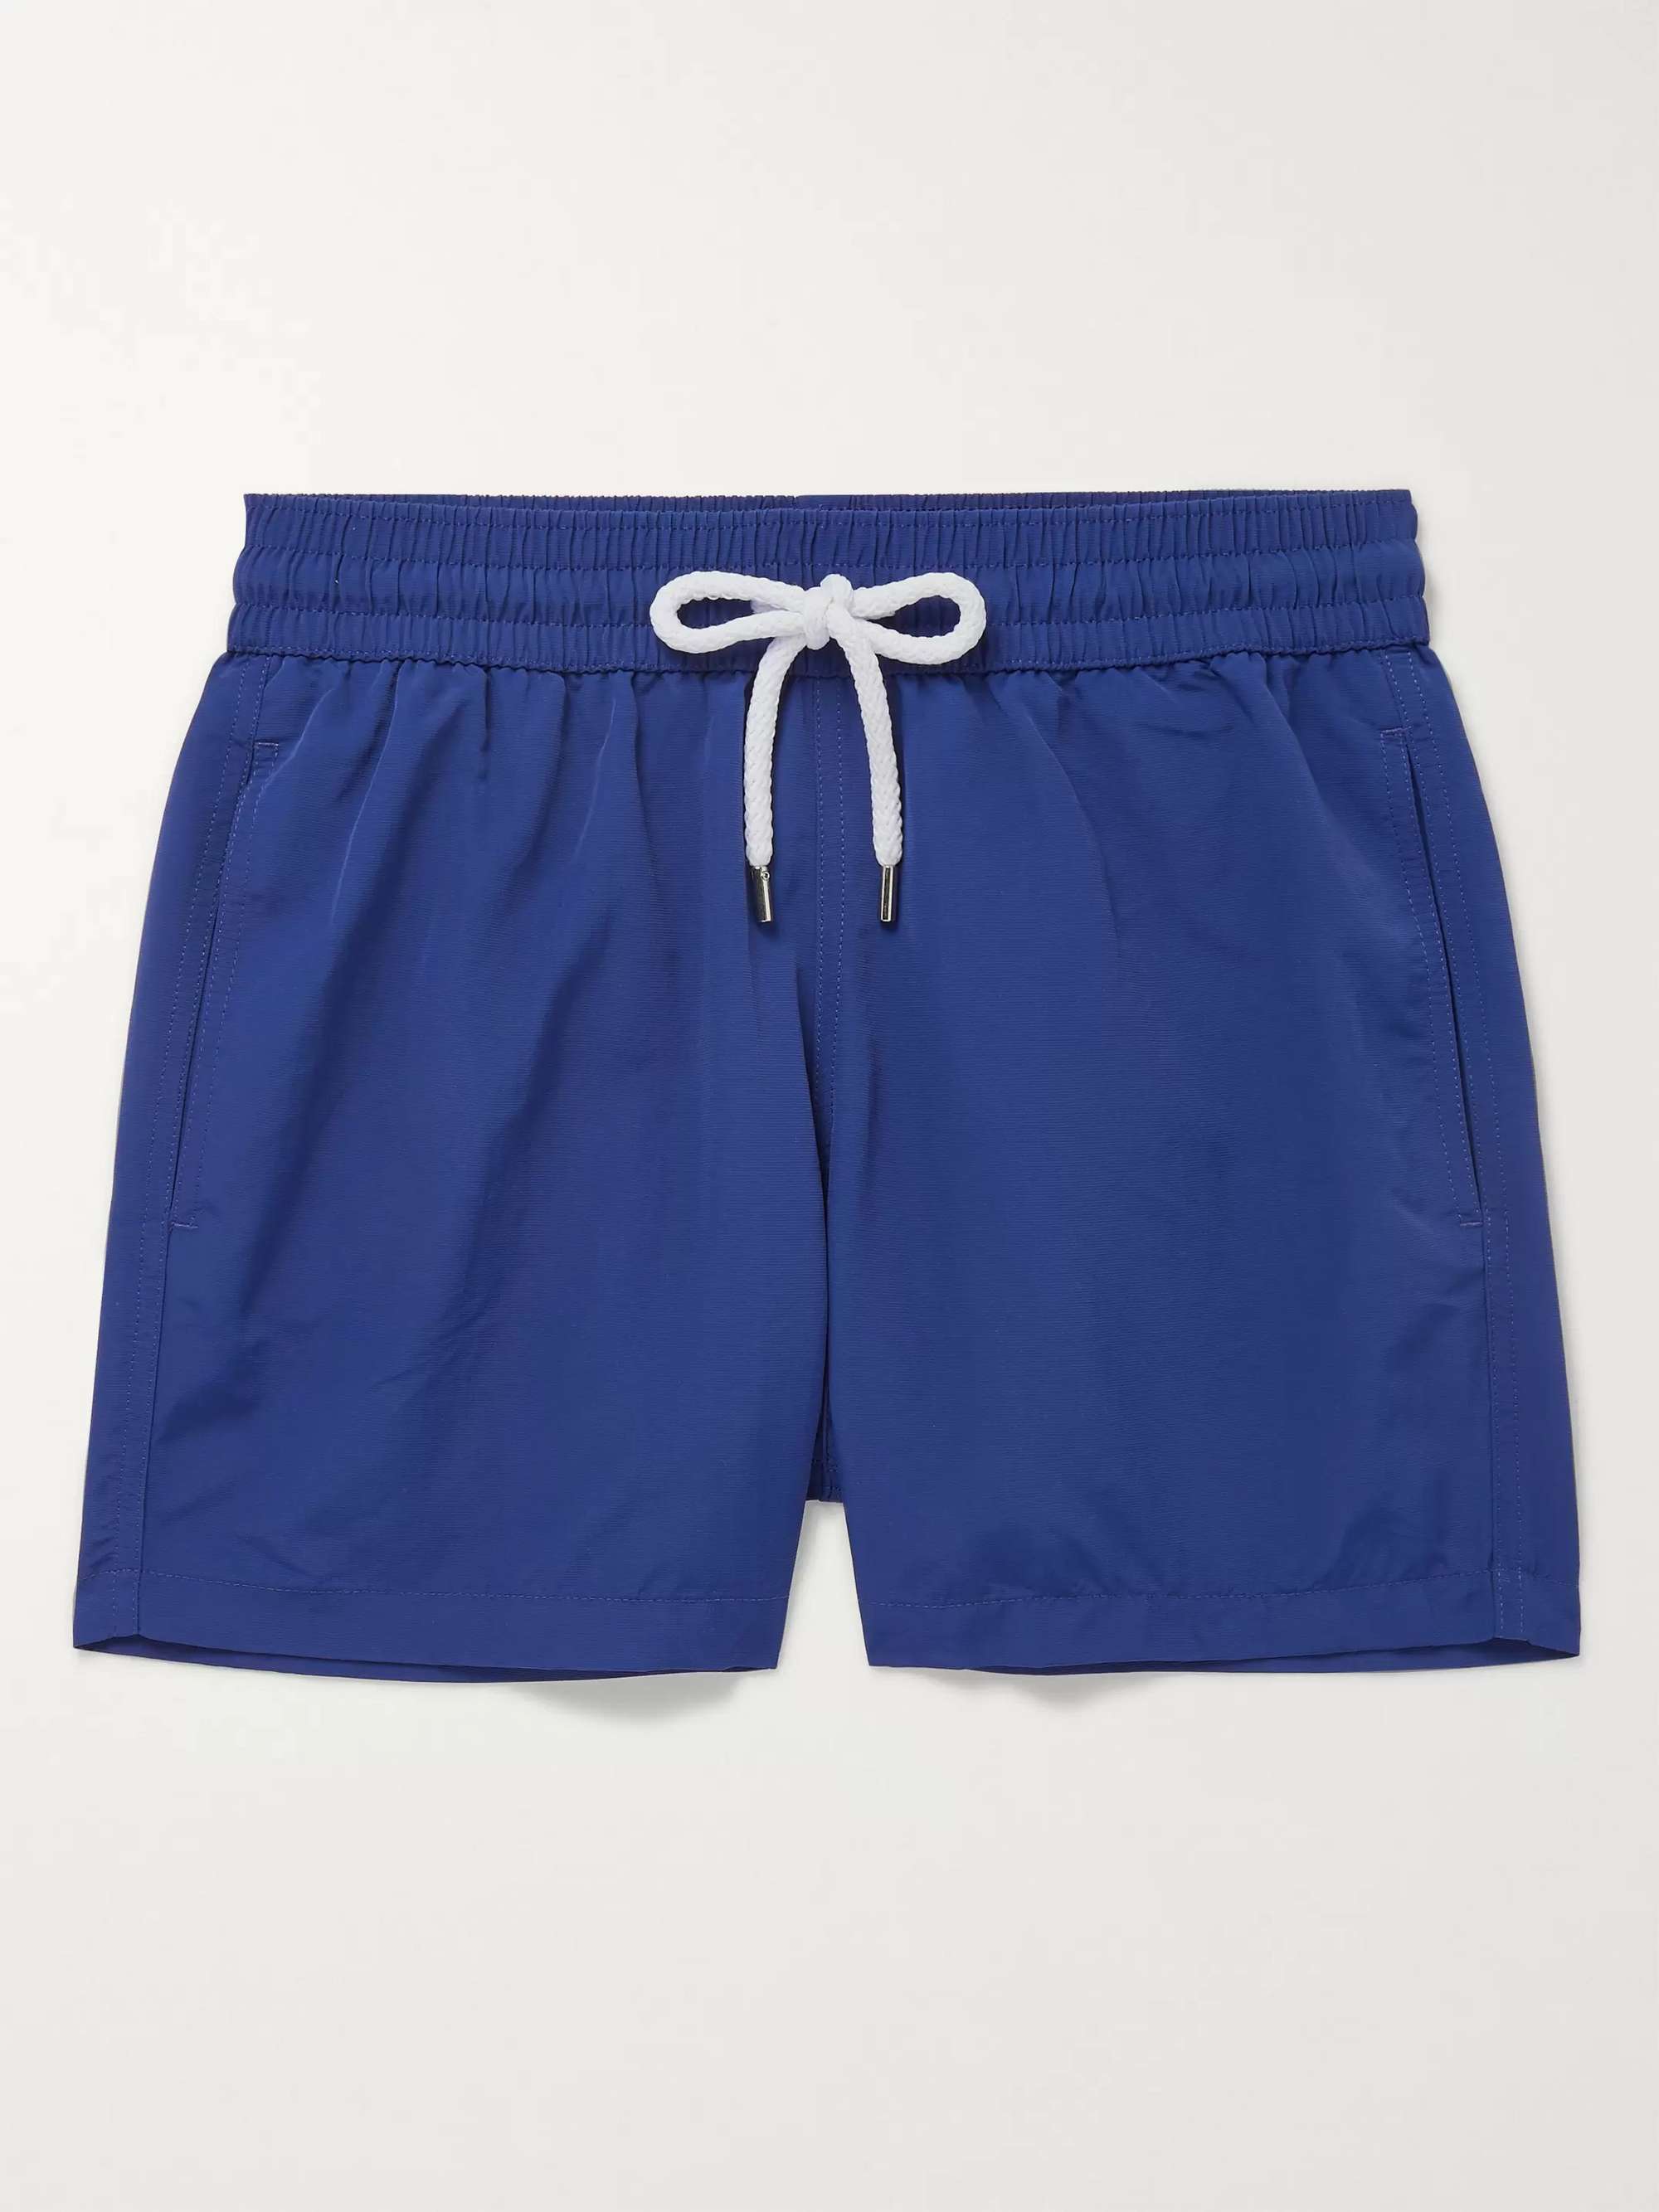 FRESCOBOL CARIOCA Slim-Fit Short-Length Swim Shorts